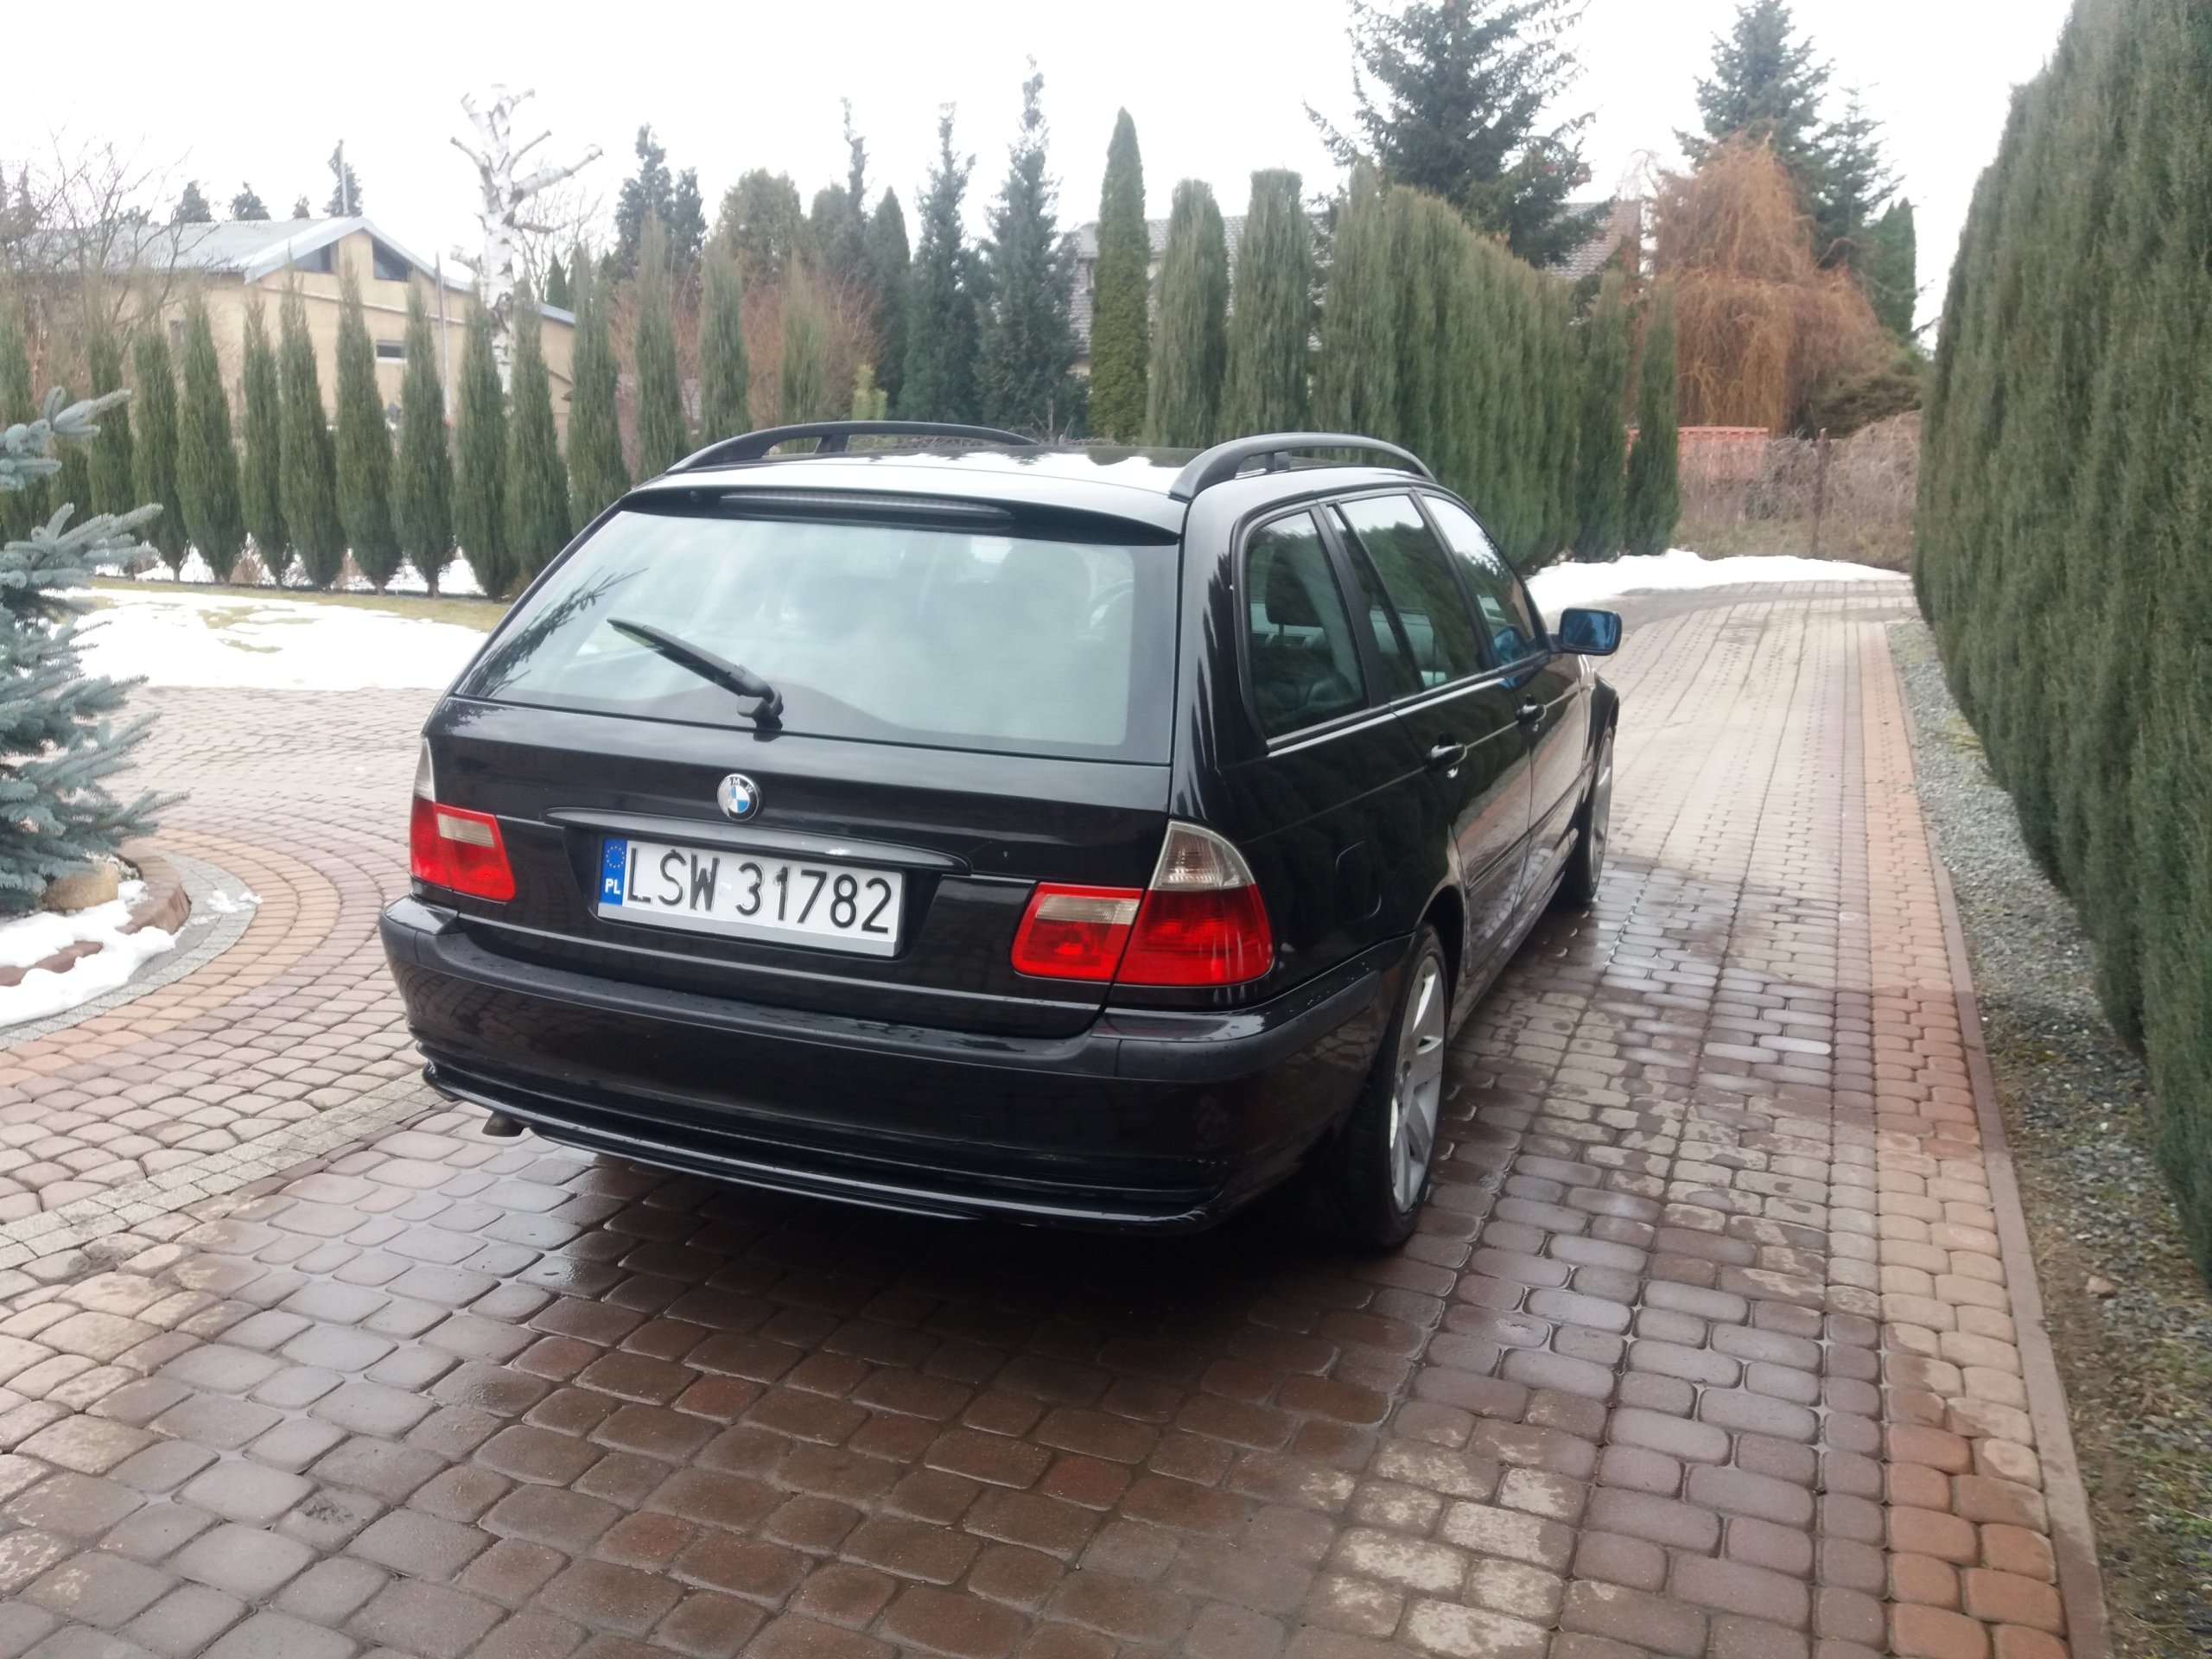 Piękne czarne BMW e46 Lift Kombi 320d 150KM 7313818321